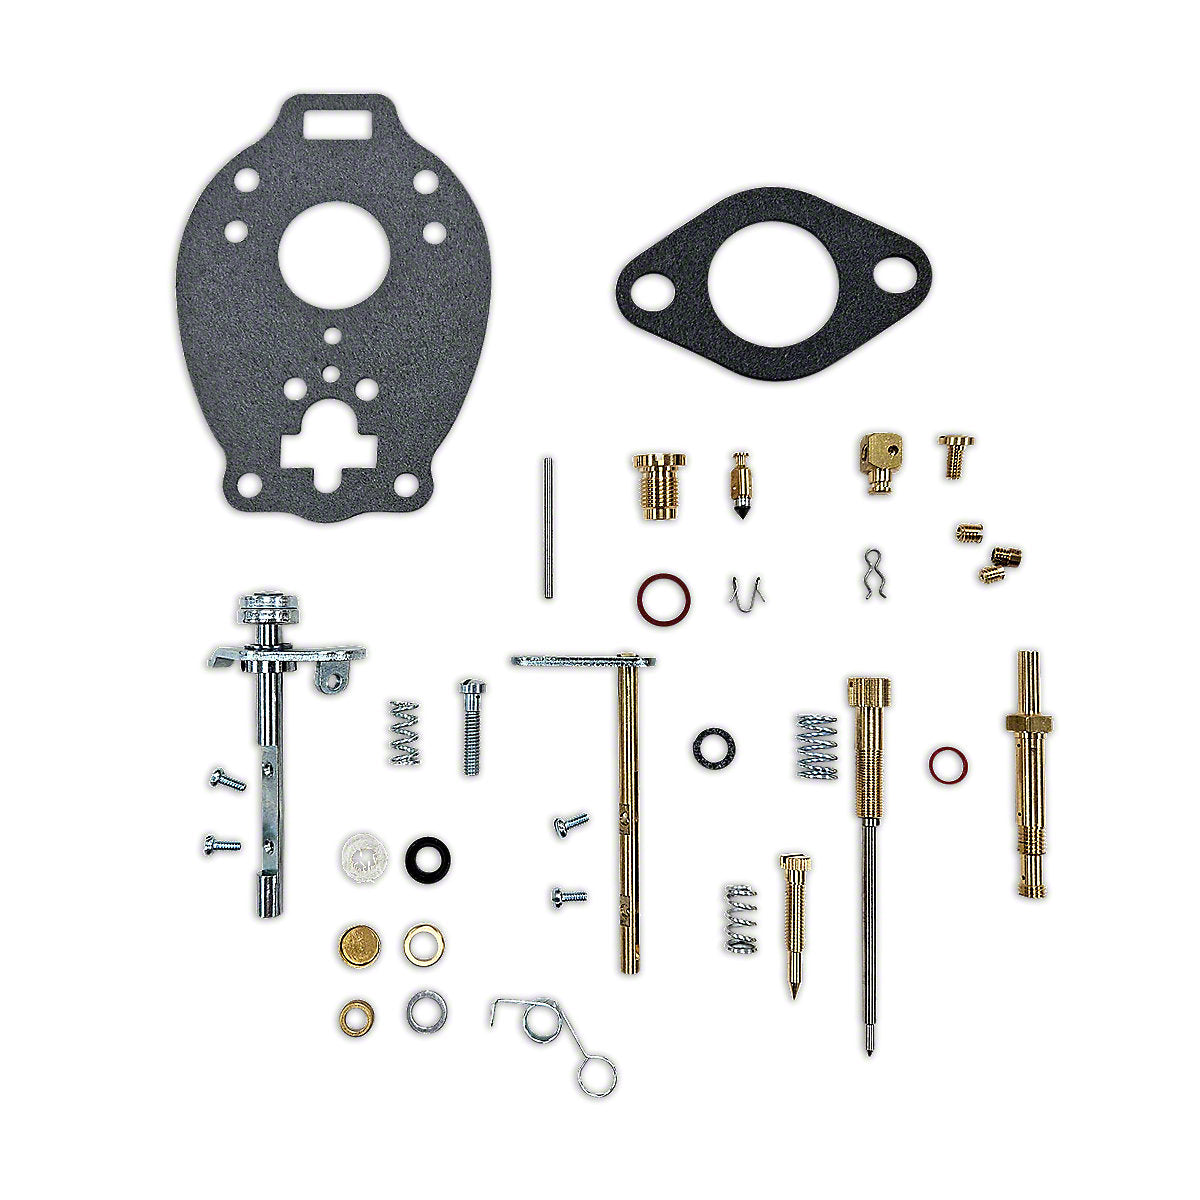 Complete Carburetor Repair Kit (Marvel Schebler carbs) Fits Allis Chalmers